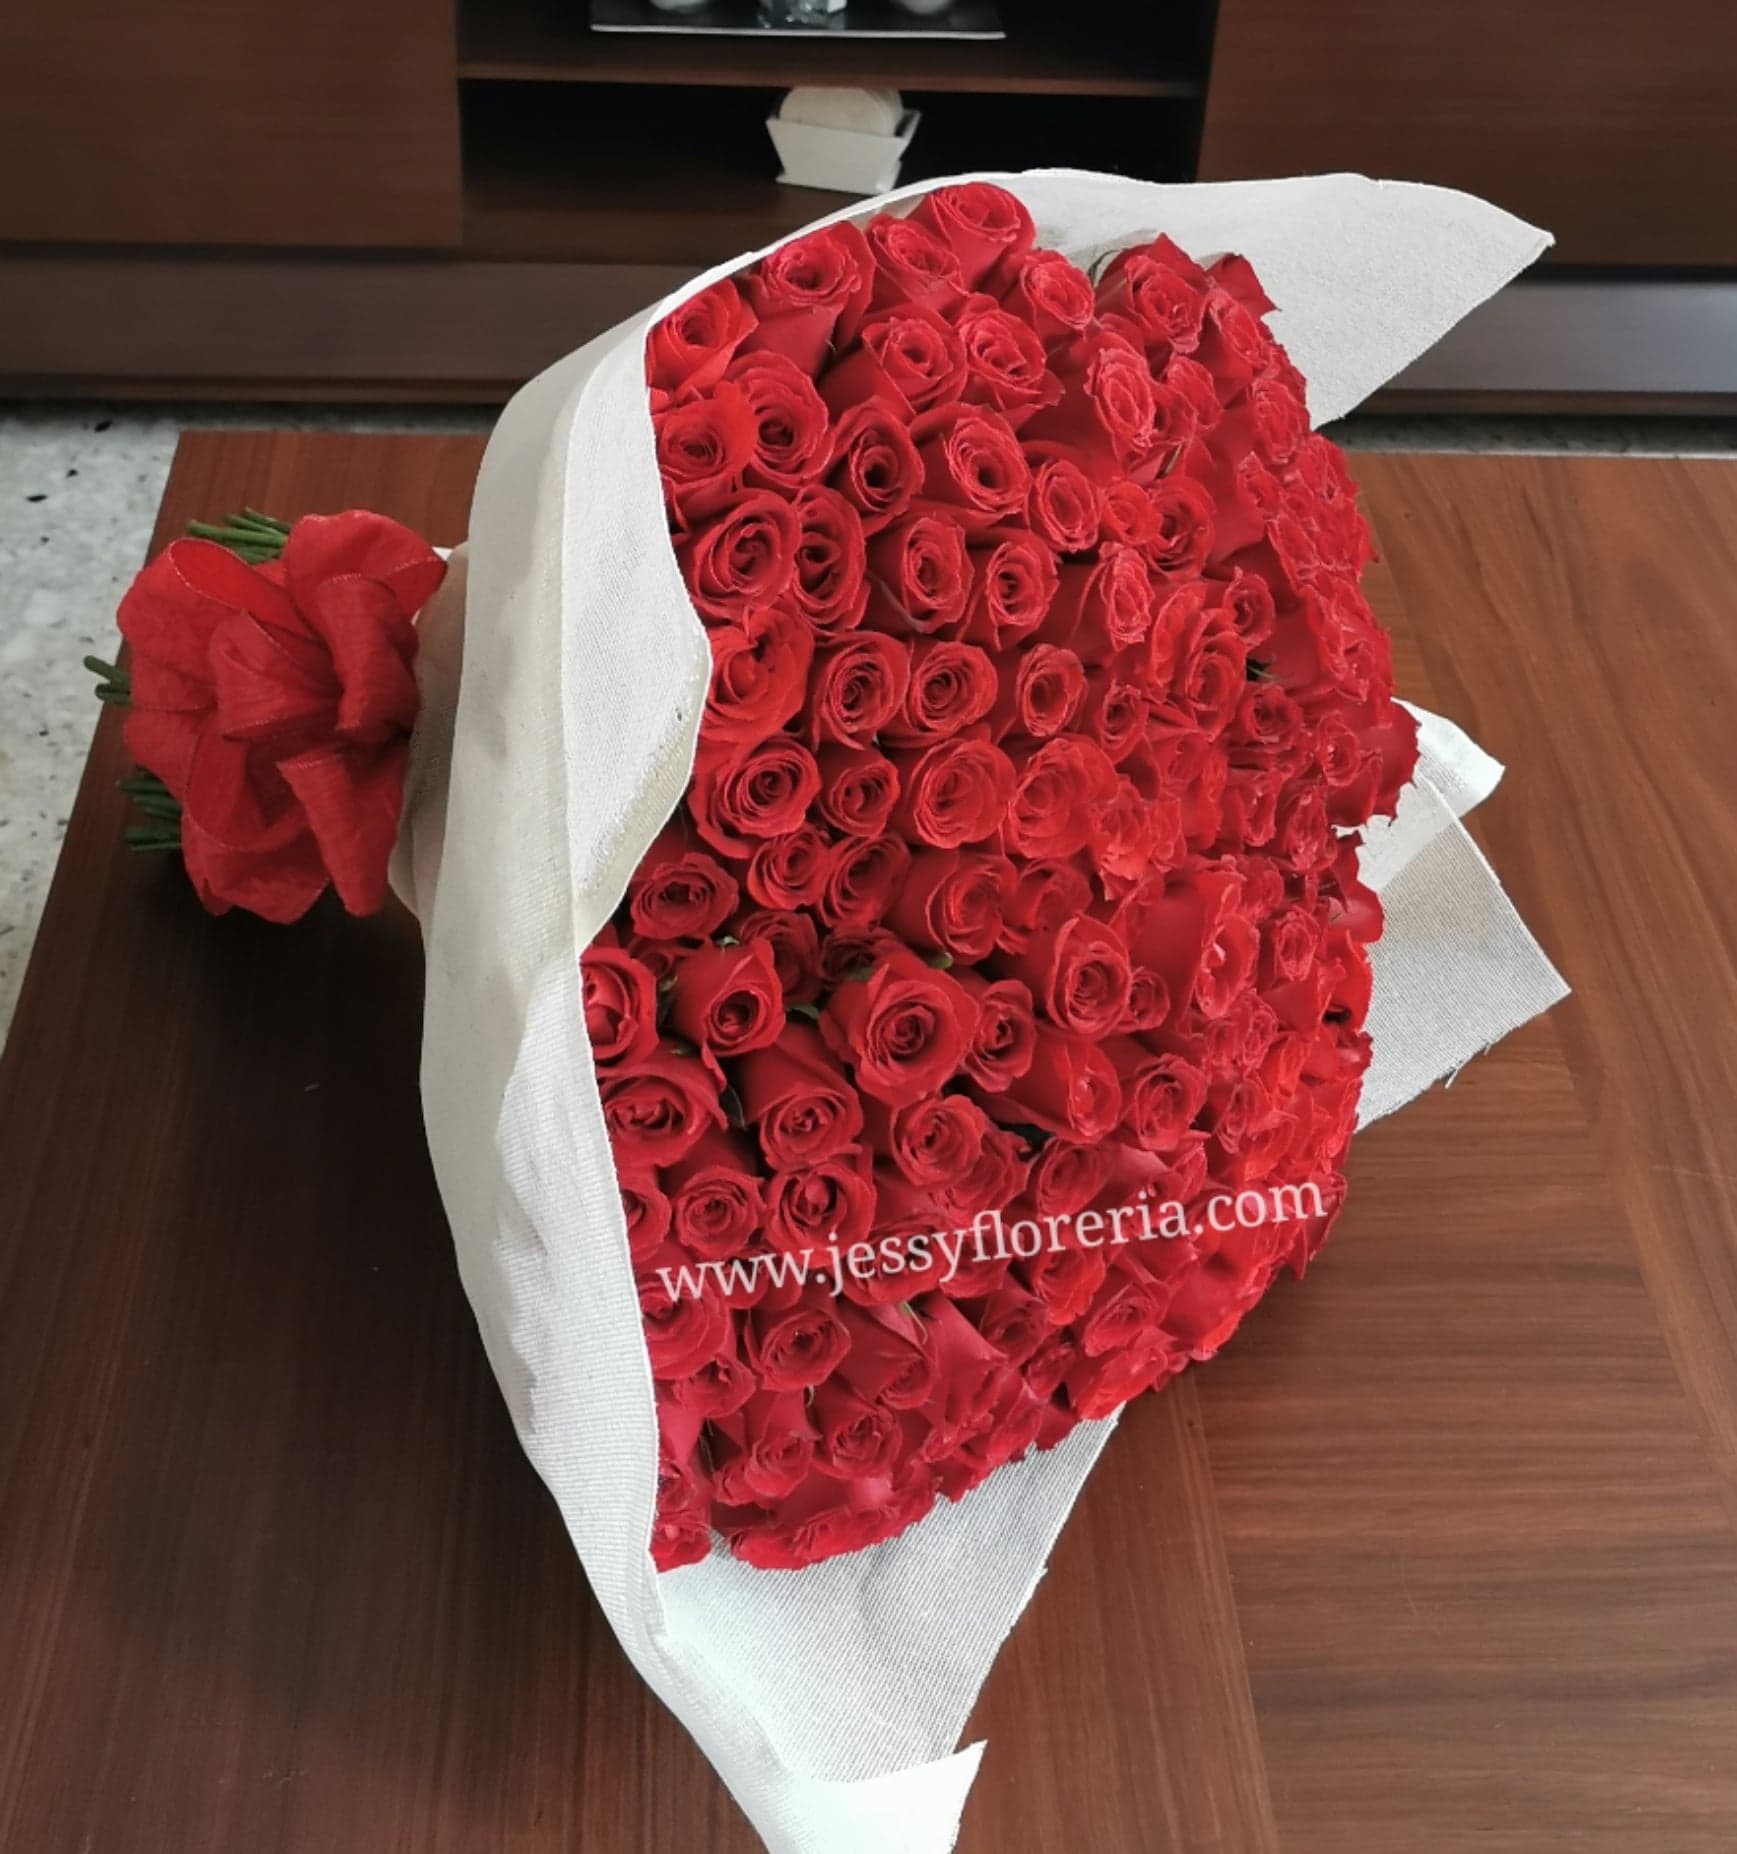 Ramo de 200 rosas rojas - Envío GRATIS mismo día 2-4 Hrs